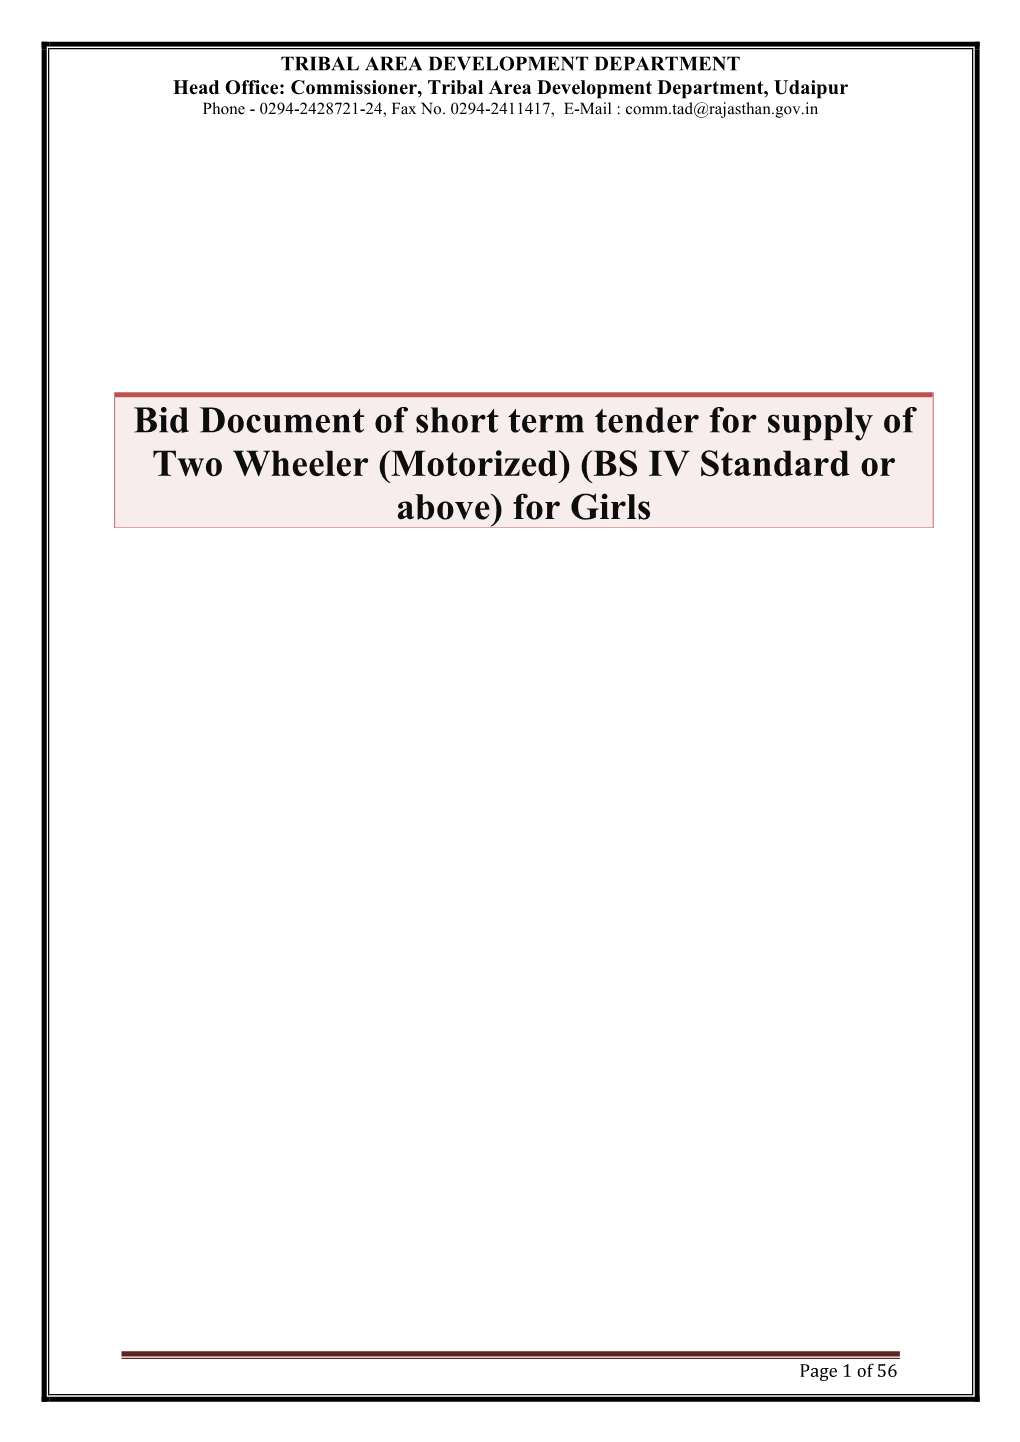 Bid Document of Short Term Tender for Supply of Two Wheeler (Motorized) (BS IV Standard Or Above) for Girls